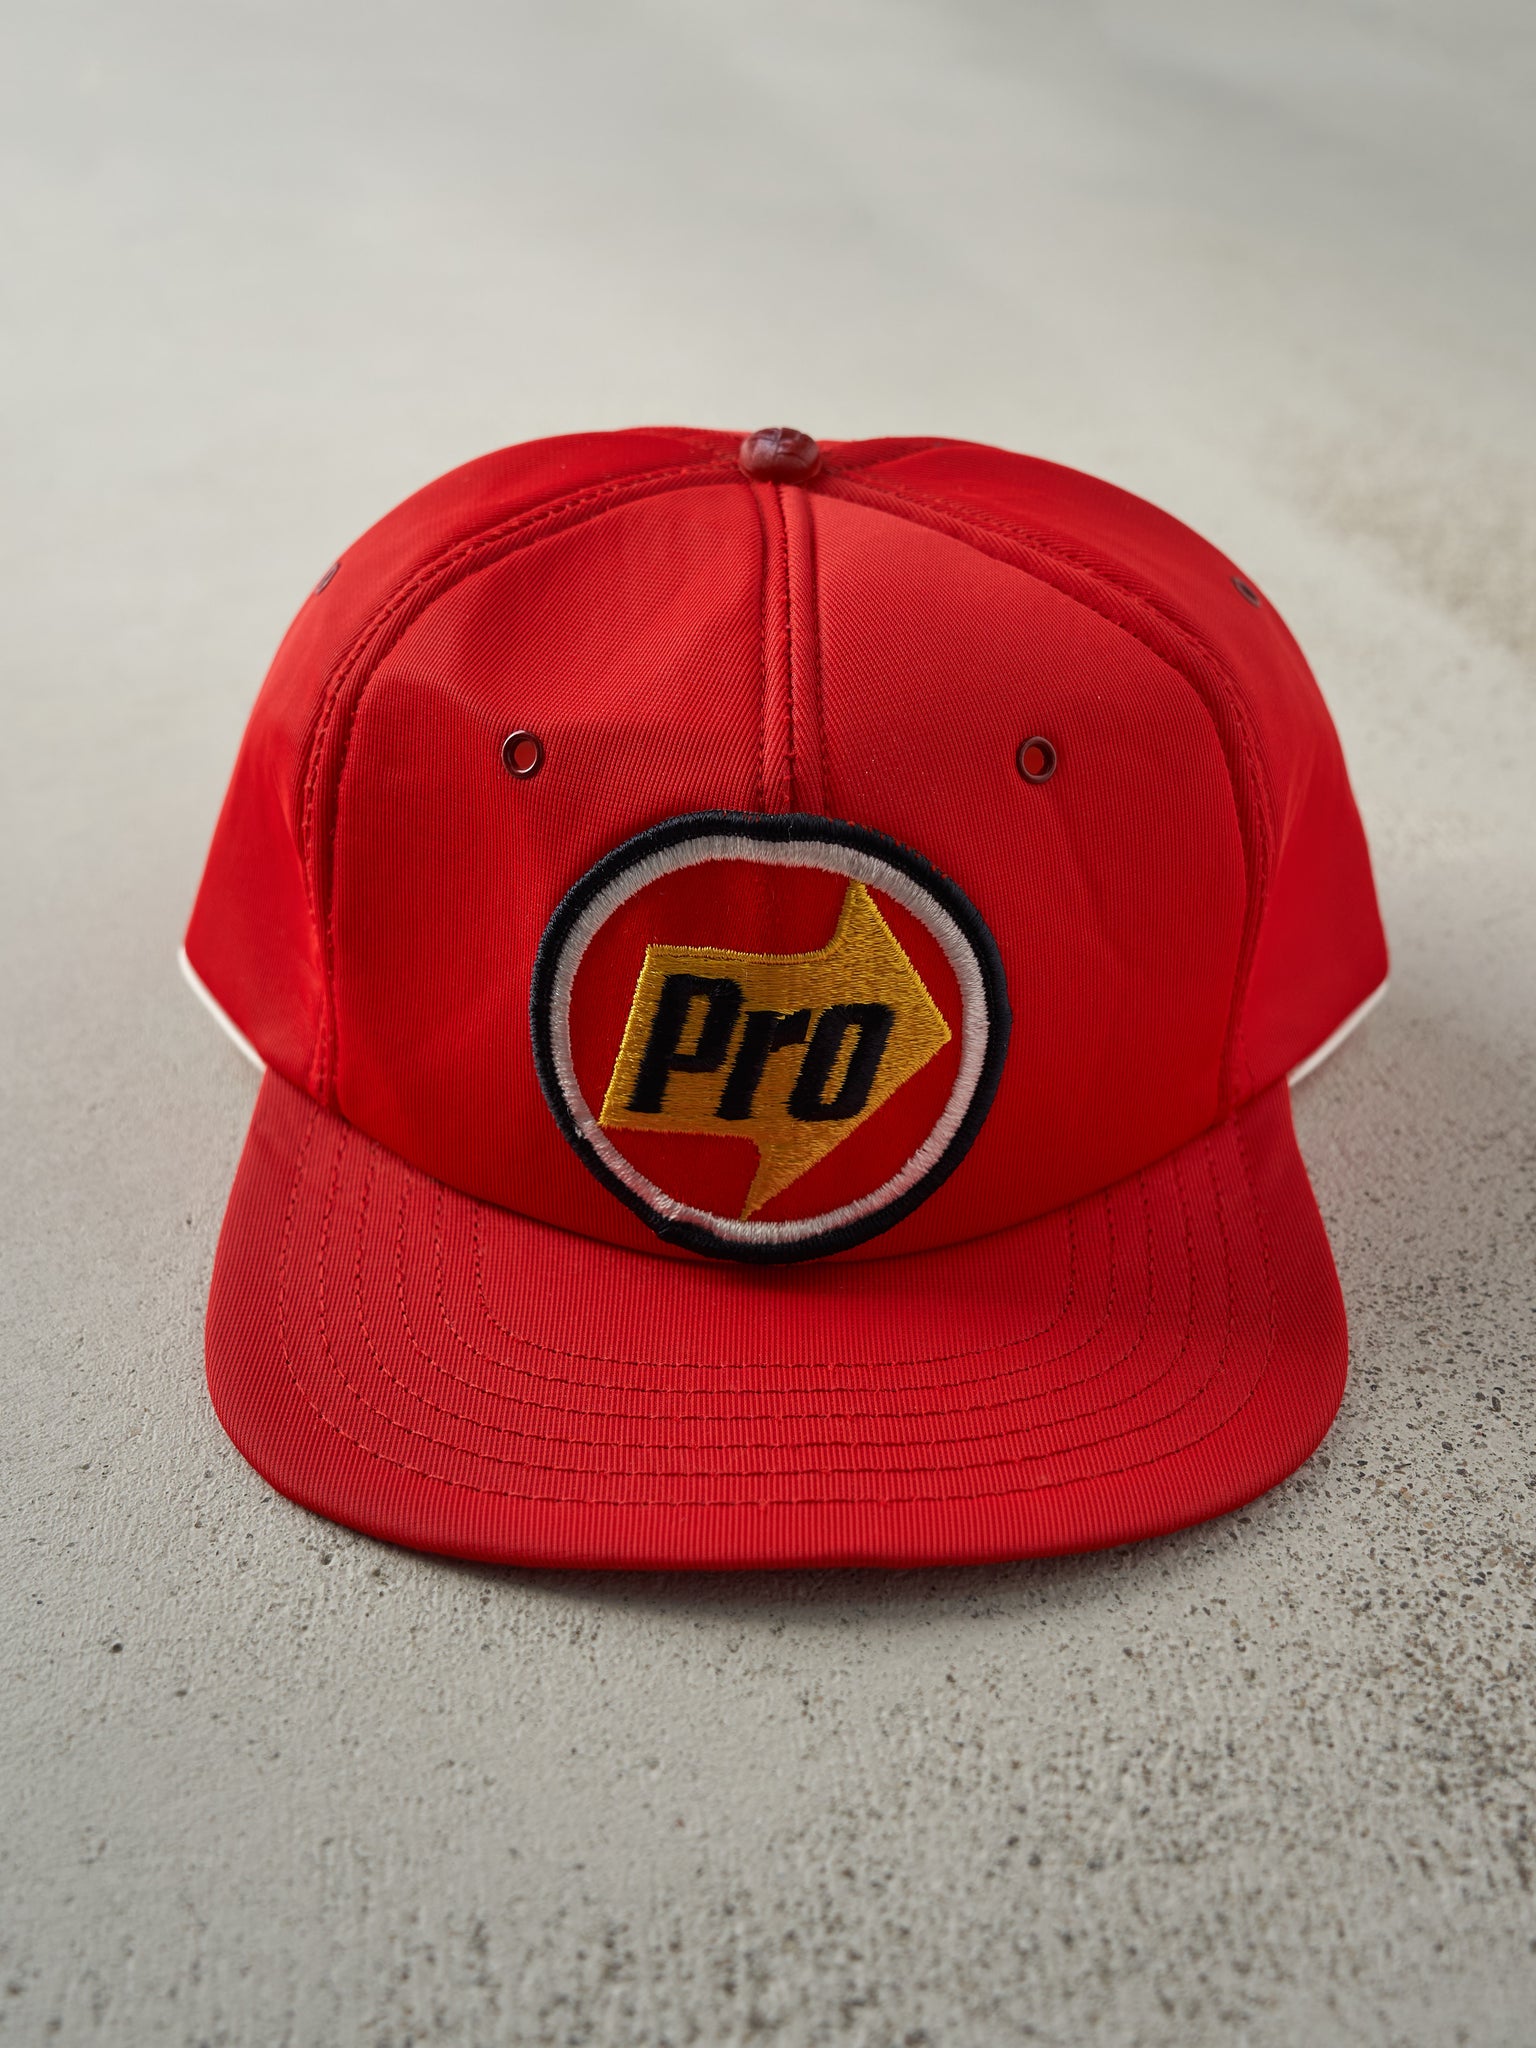 Vintage 80s Red Pro Patch Foam Snapback Hat